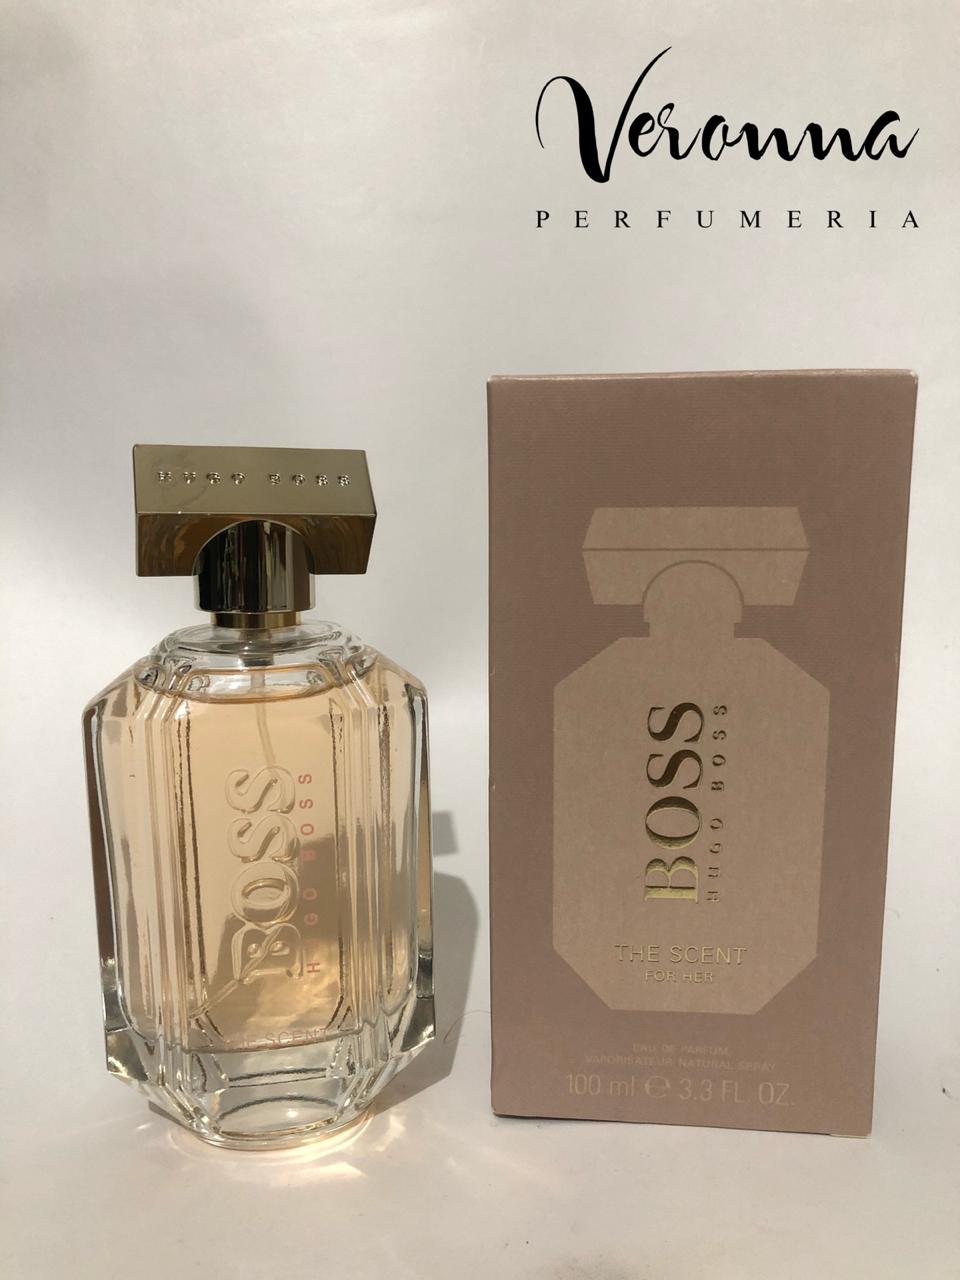 Hugo Boss The Scent Her – Veronna Perfumeria®